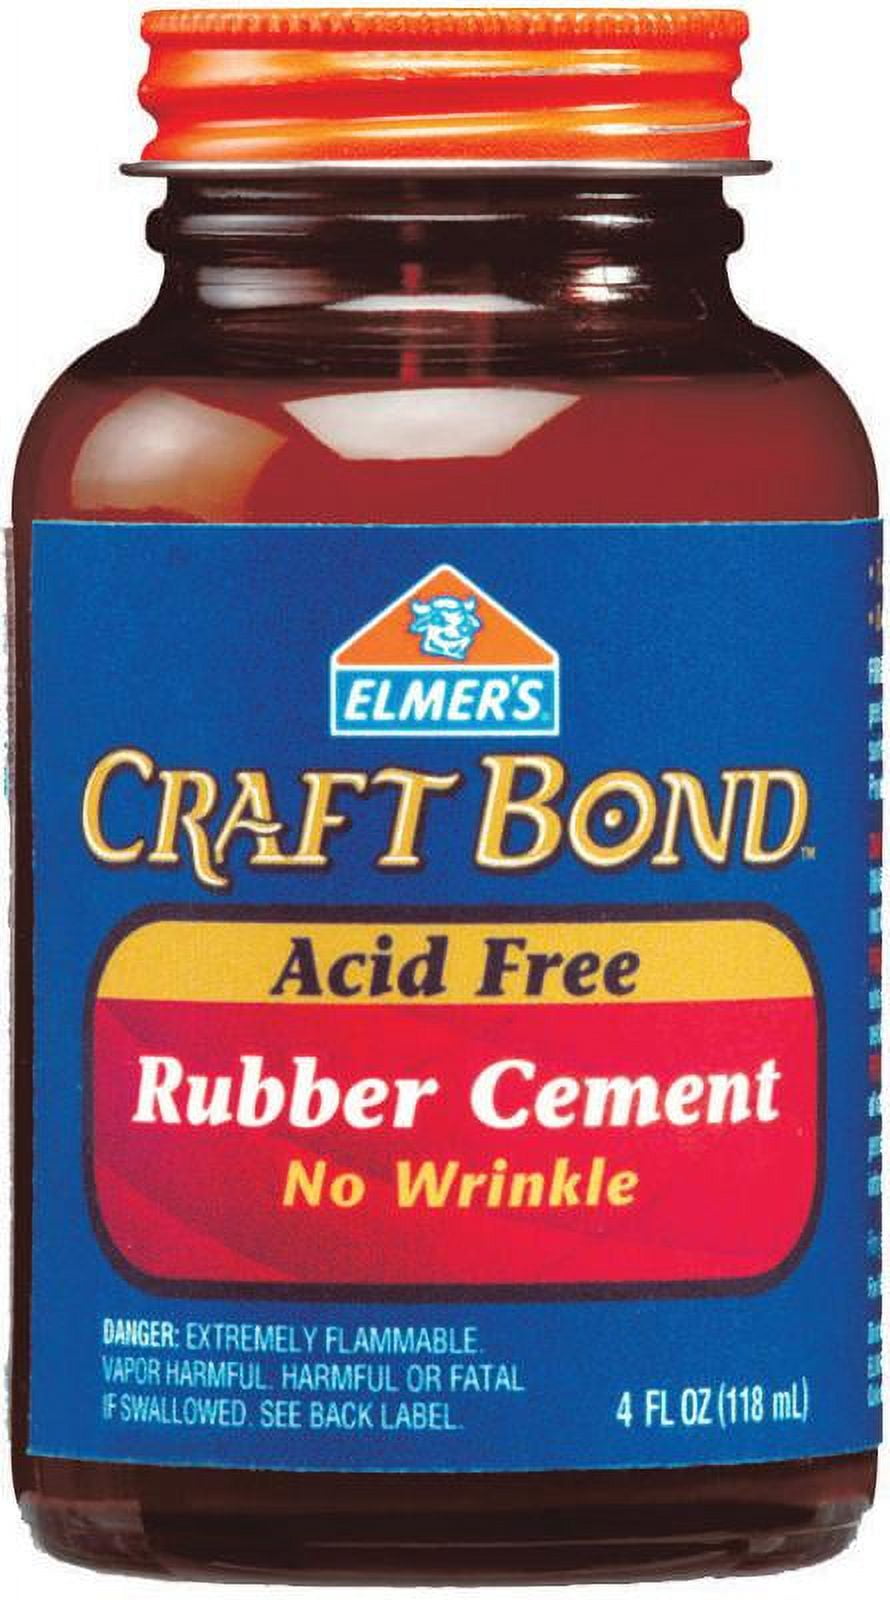 Elmer's Craft Bond Rubber Cement, No Wrinkle - 4 fl oz